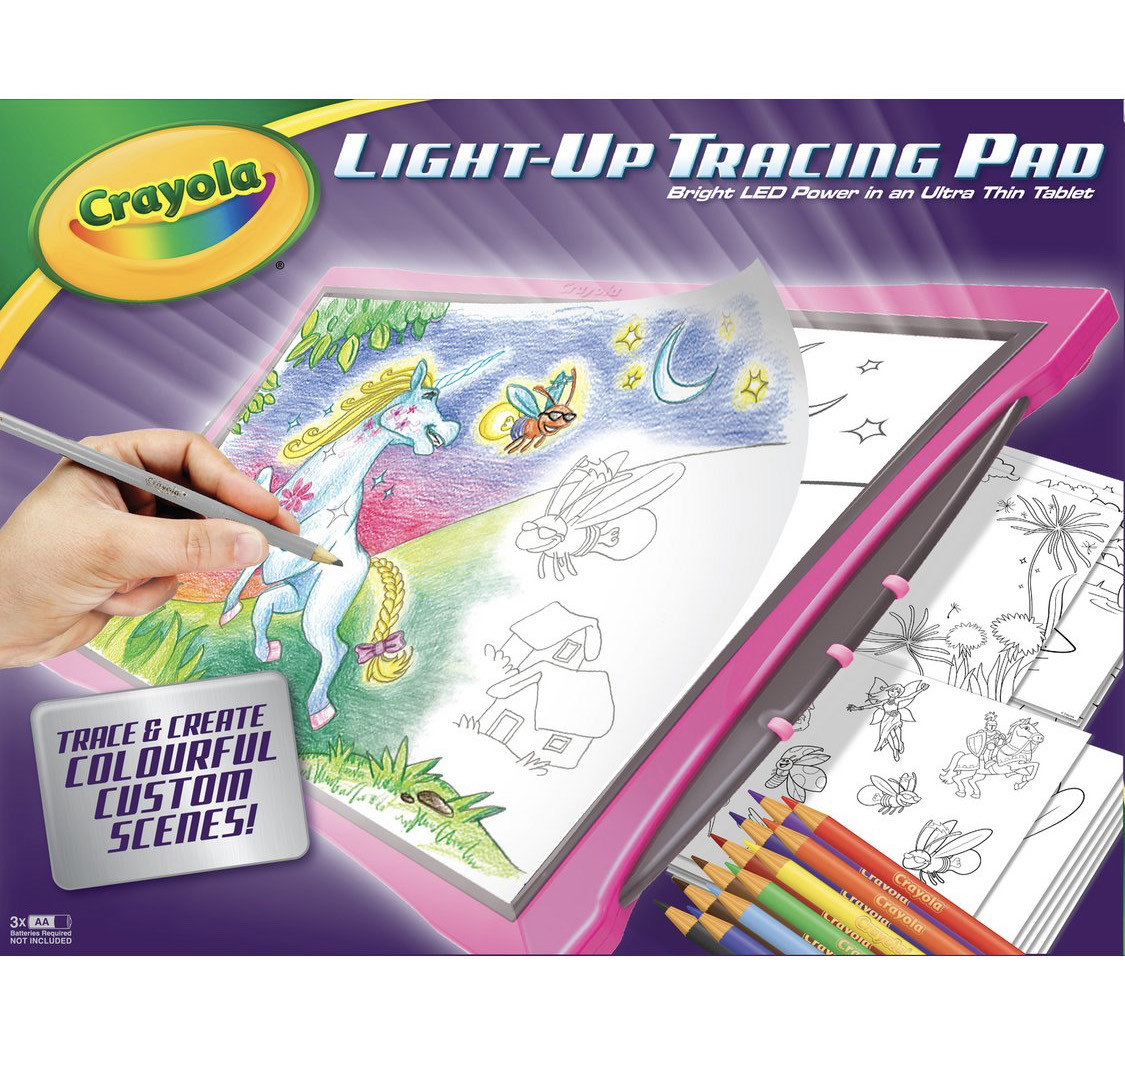 Crayola Light Up Tracing Pad £9.99 B&M (Spalding) hotukdeals